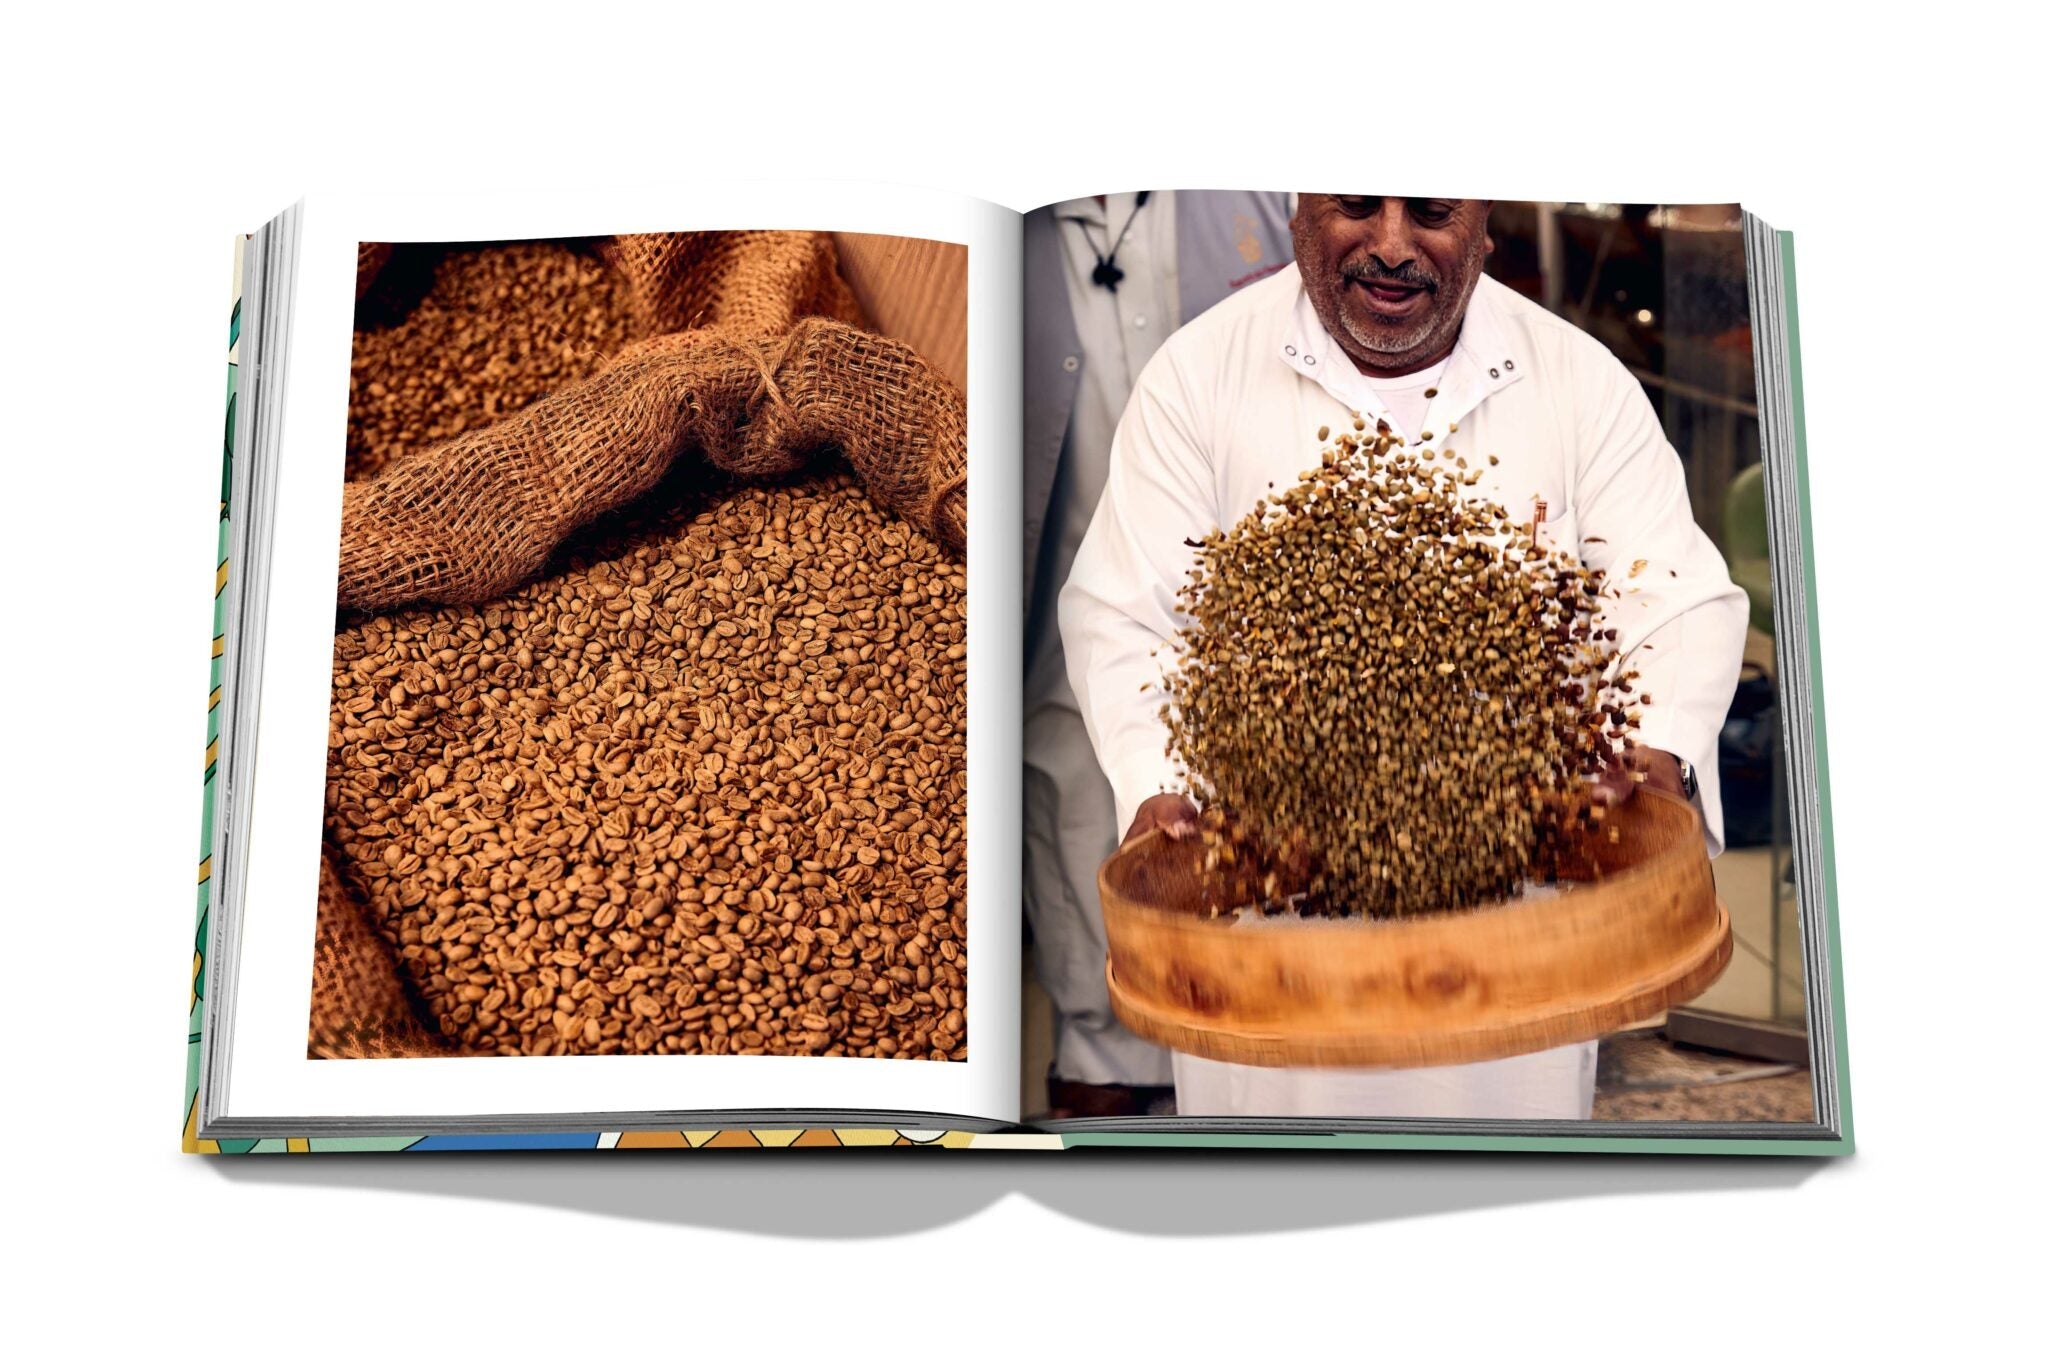 Assouline Saudi Coffee: The Culture of Hospitalityity